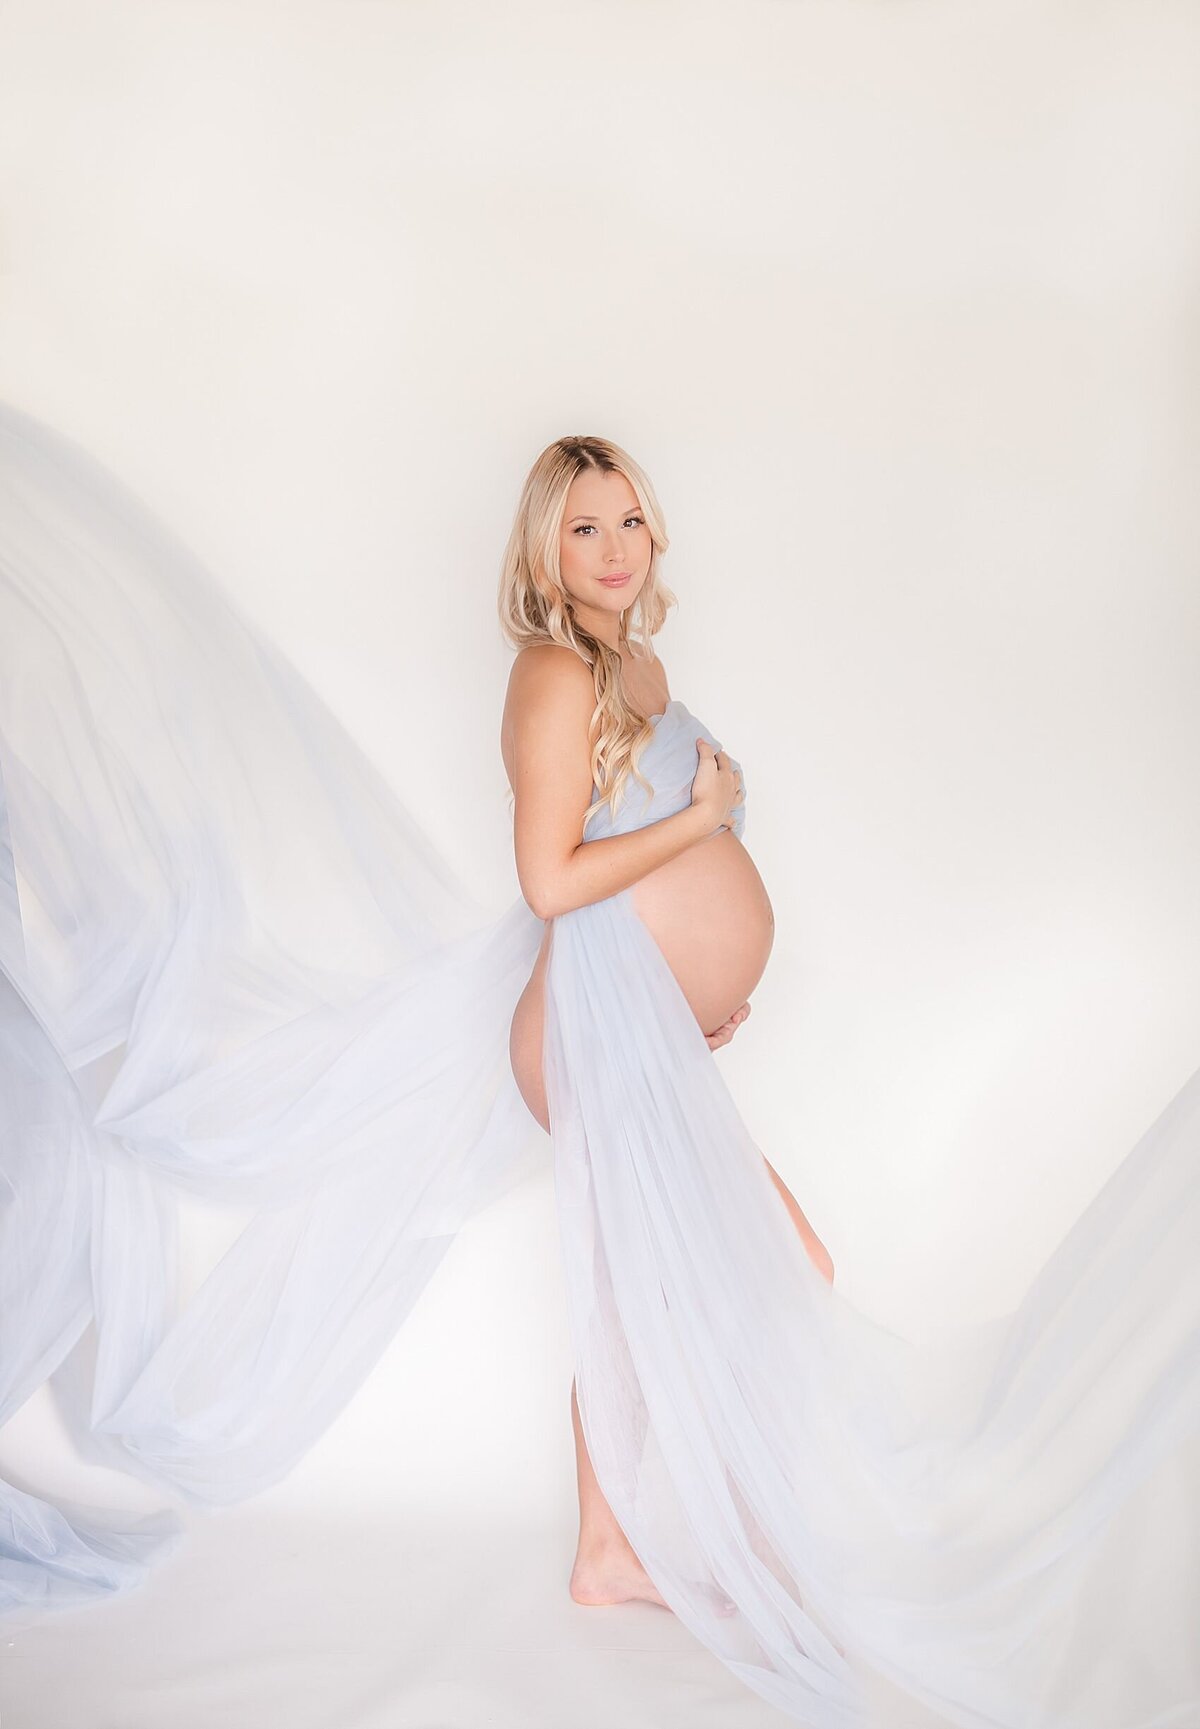 maternity photography orlando fabric